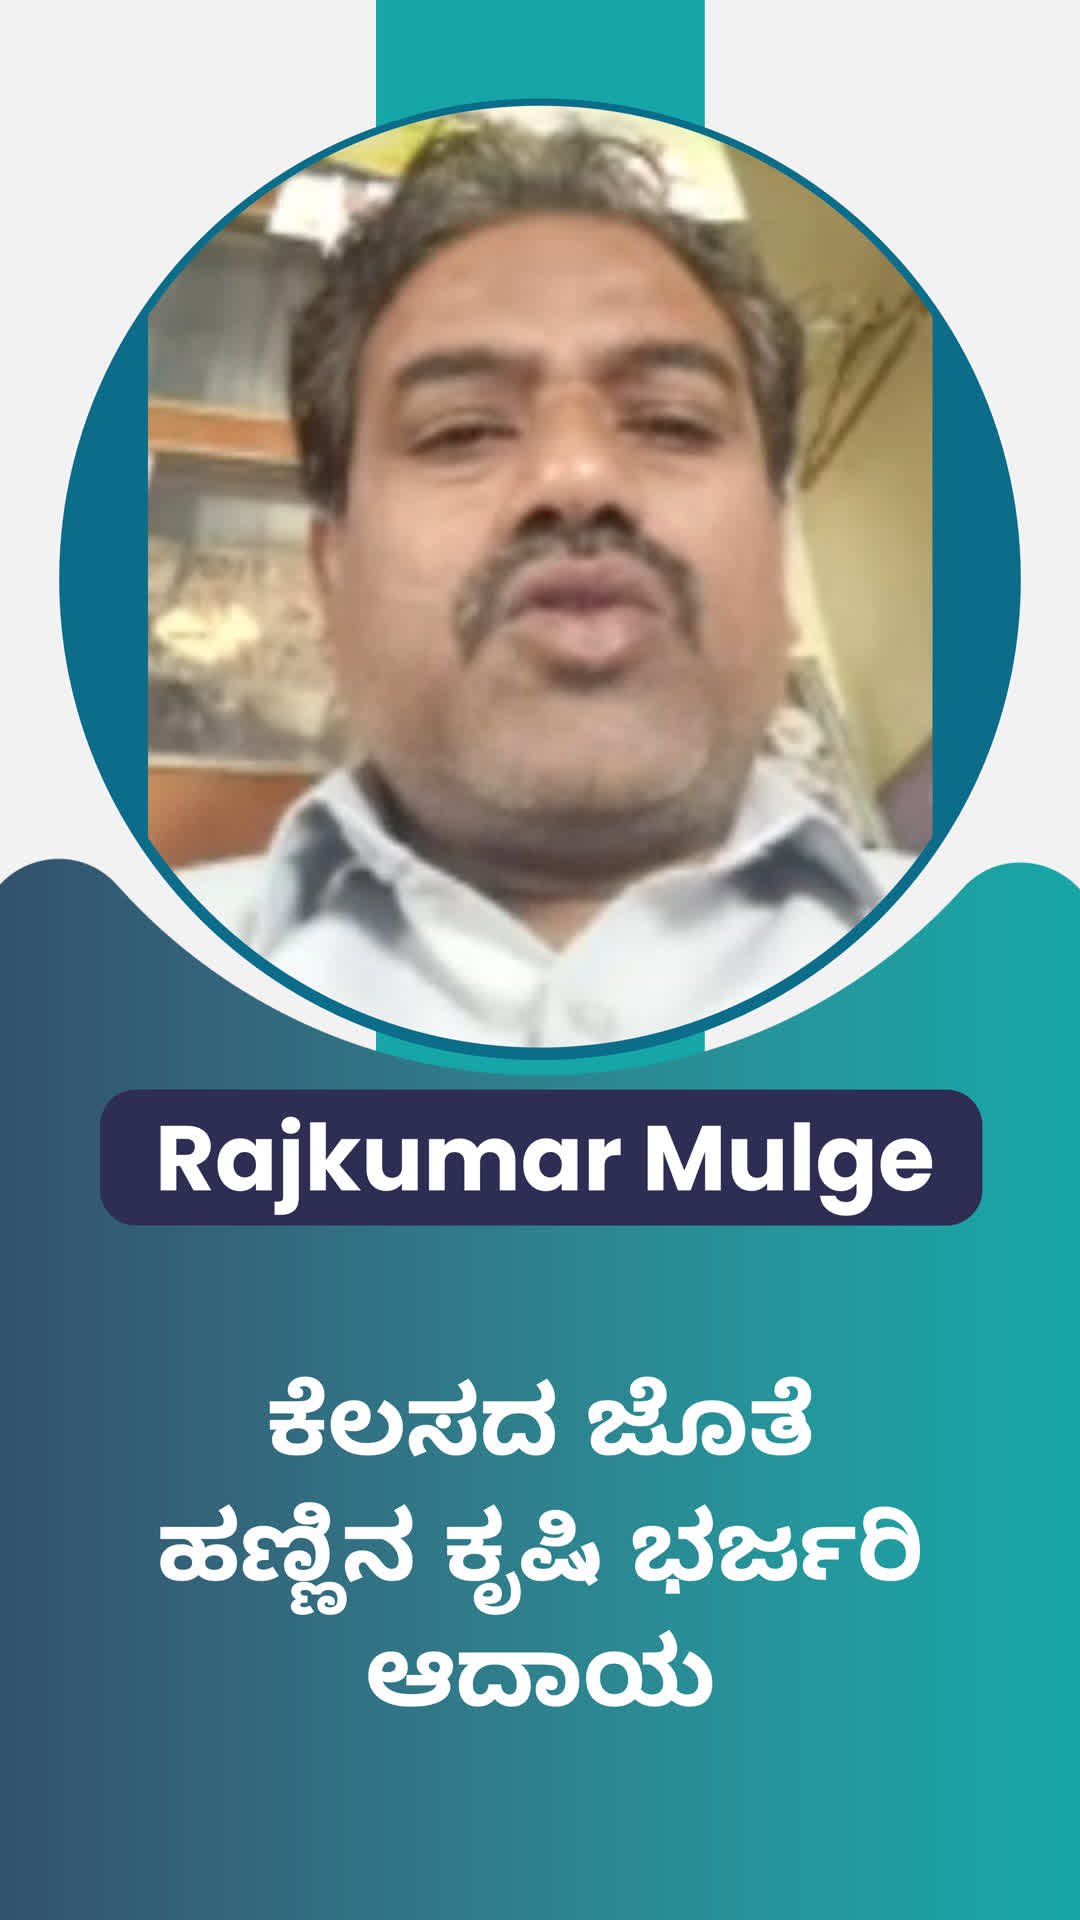 Rajkumar Mulge 's Honest Review of ffreedom app - Kalaburagi ,Karnataka